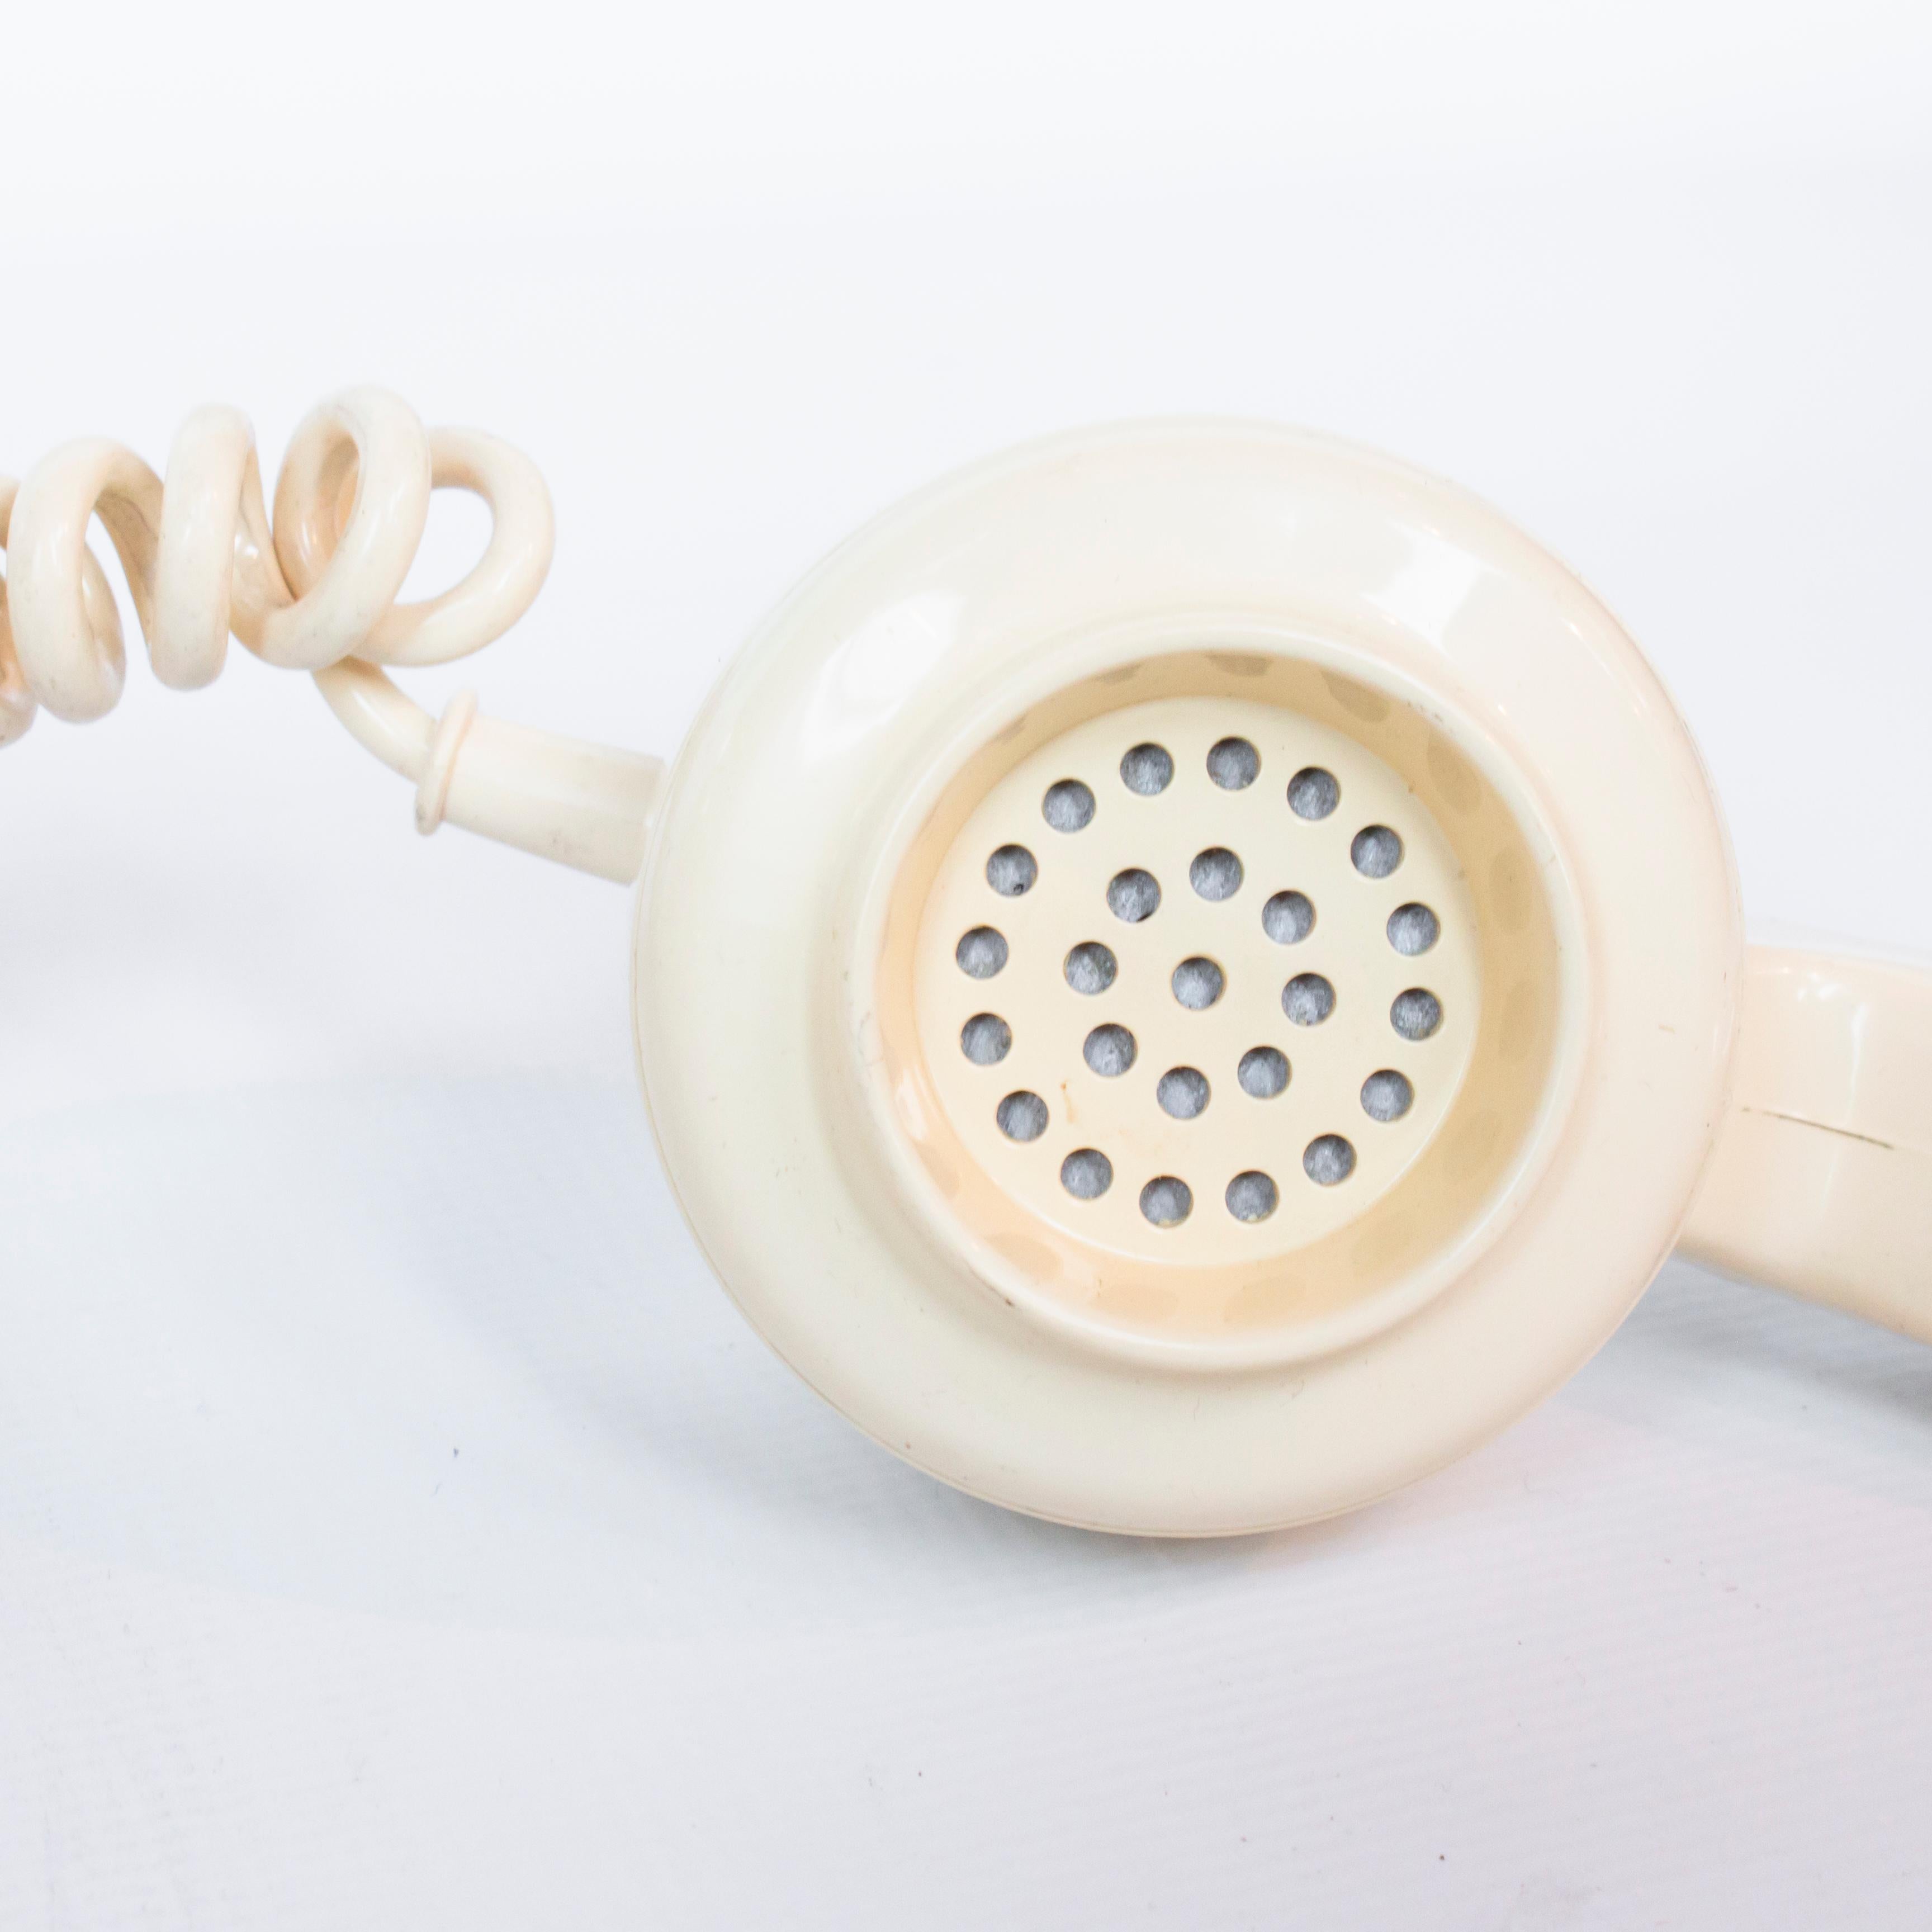 Bakelite Original 1967 GPO Model 706 Telephone in Ivory, Original Nylon Carrying Strap